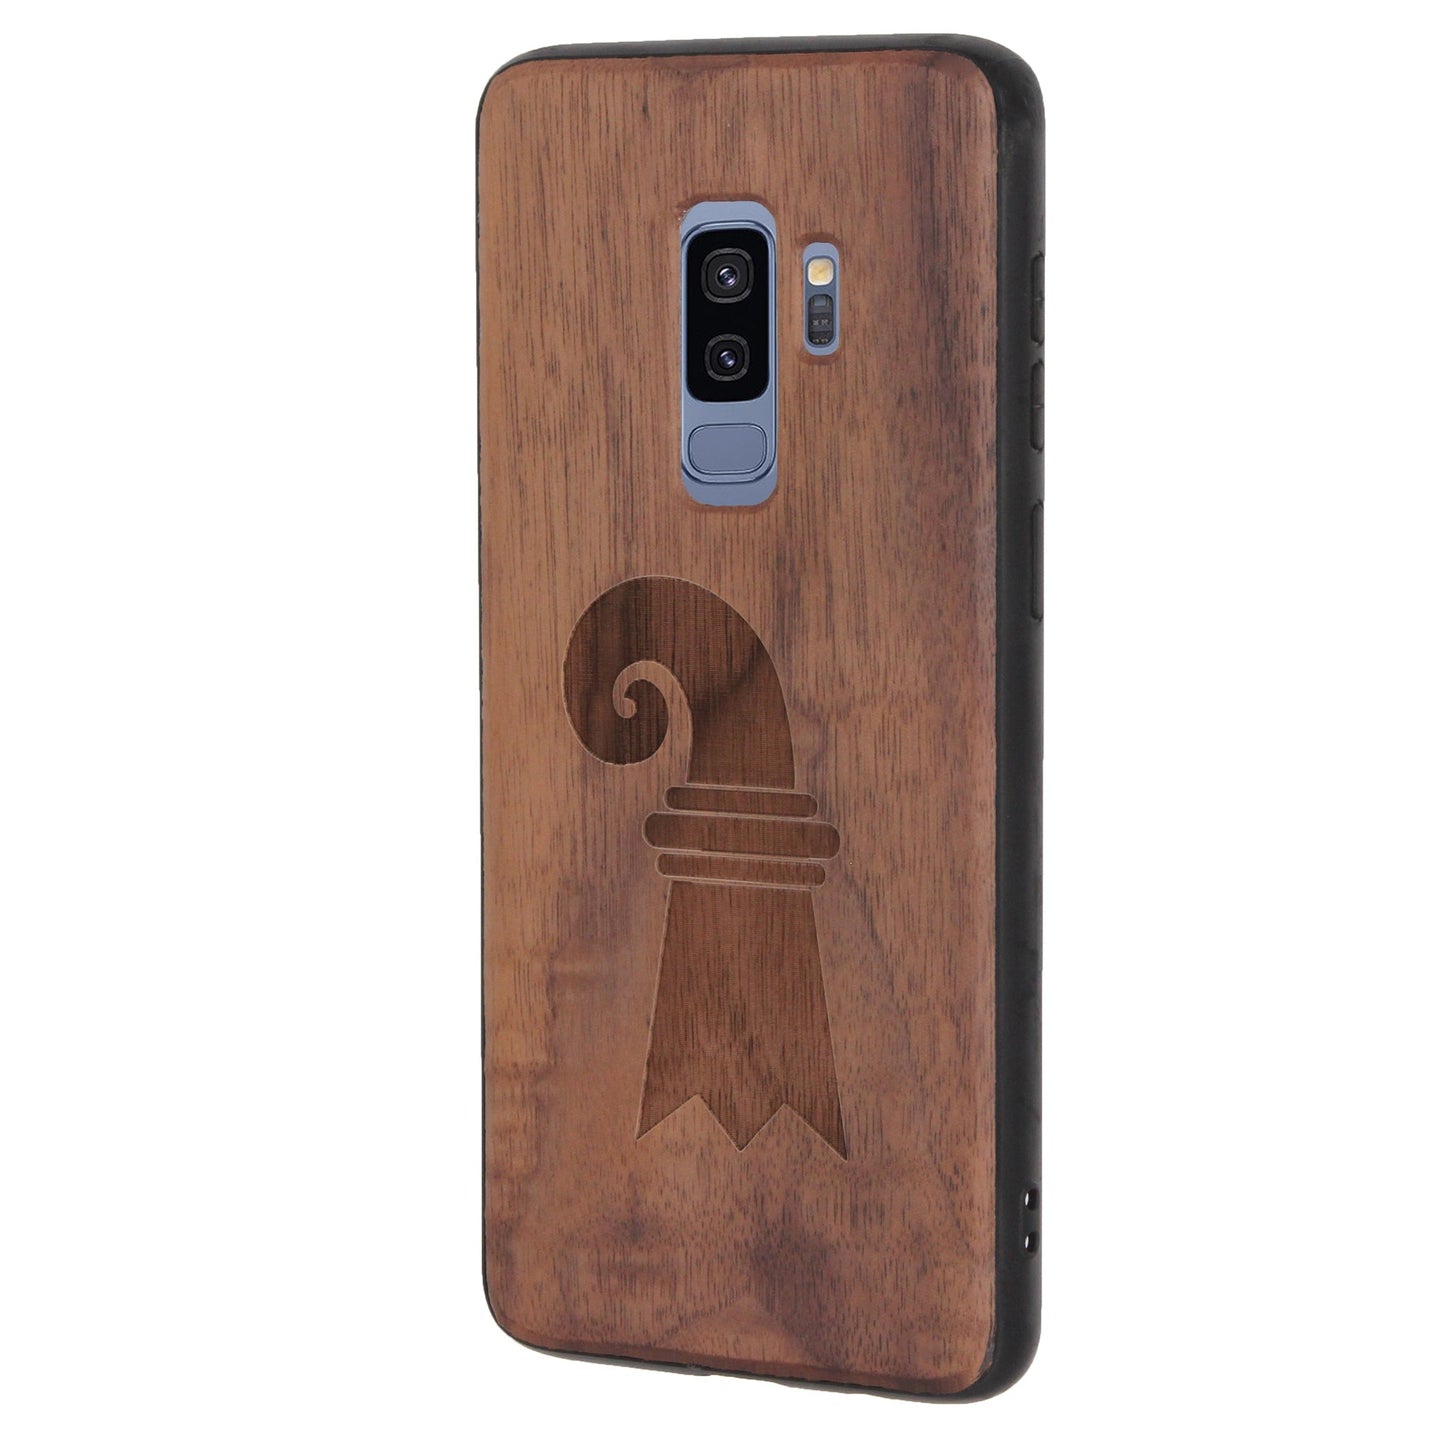 Baslerstab Eden Case made of walnut wood for Samsung Galaxy S9 Plus